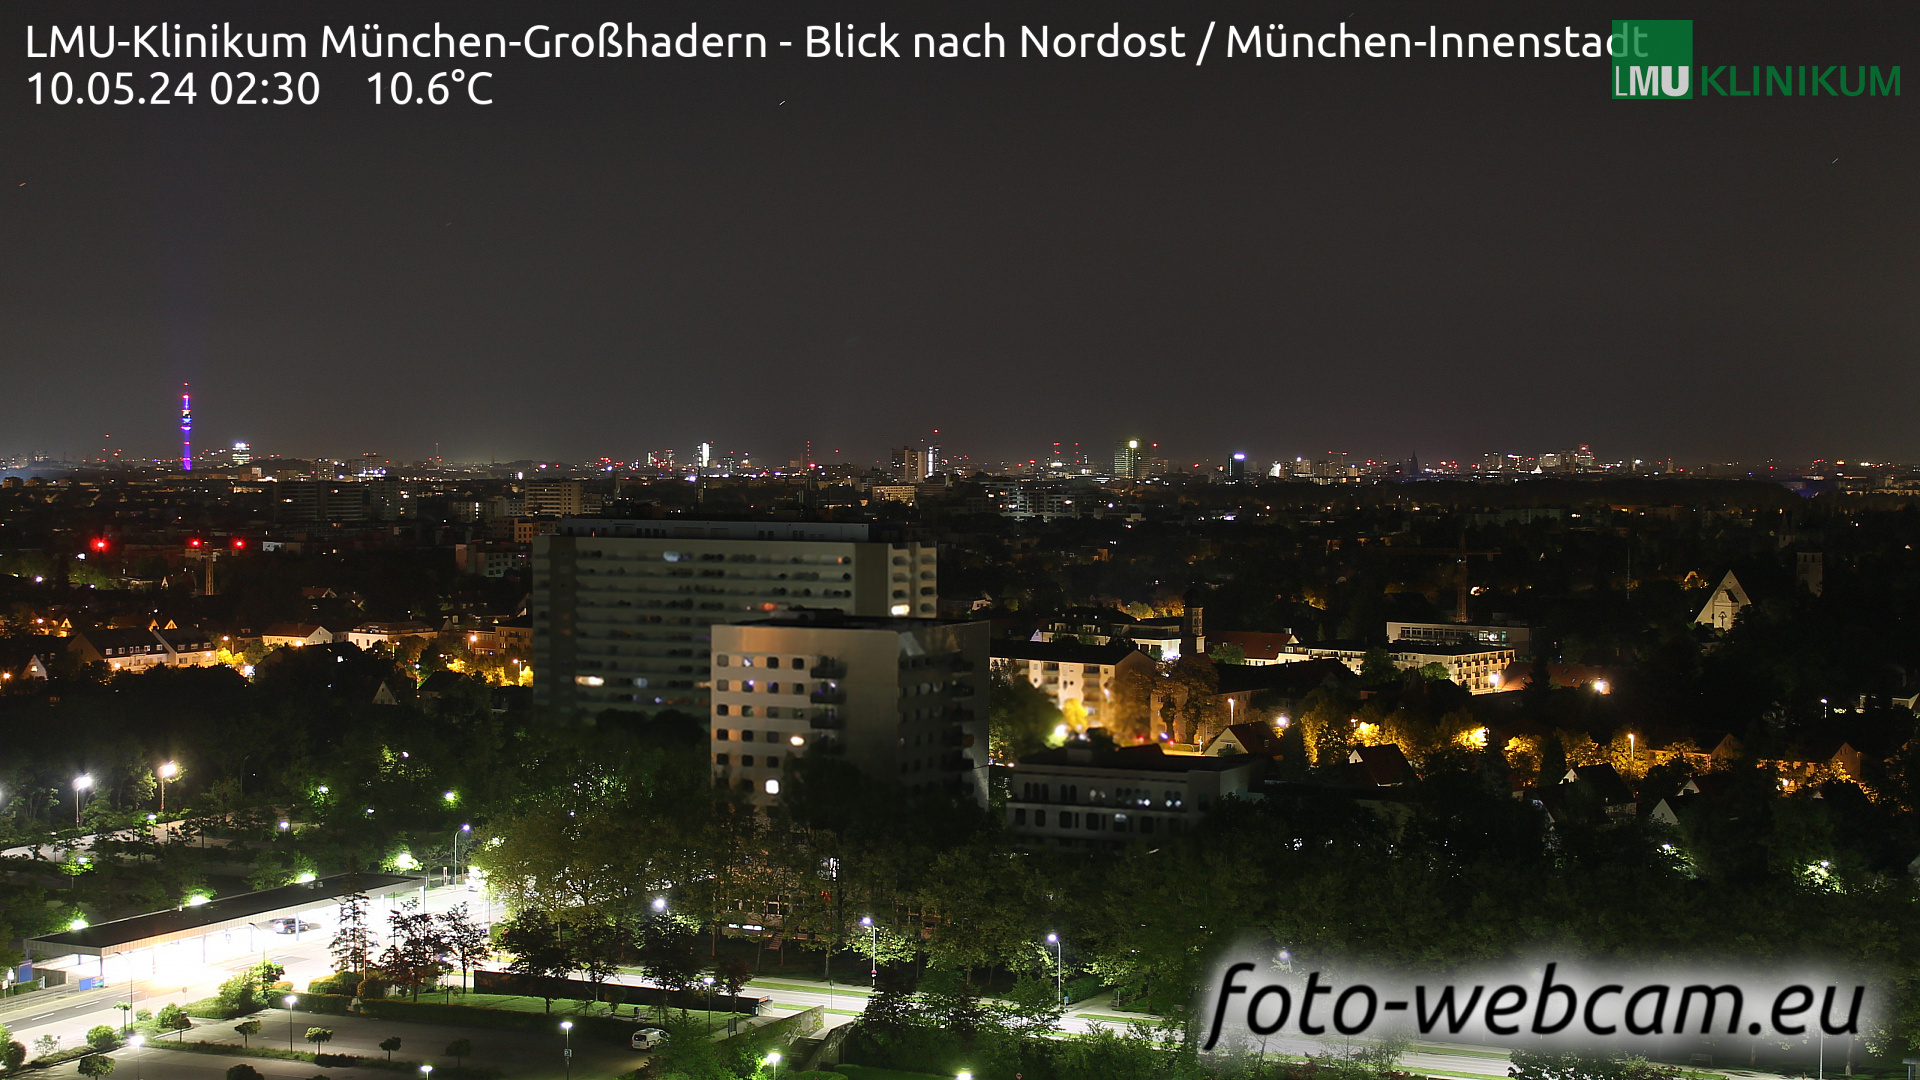 Munich Dom. 02:46